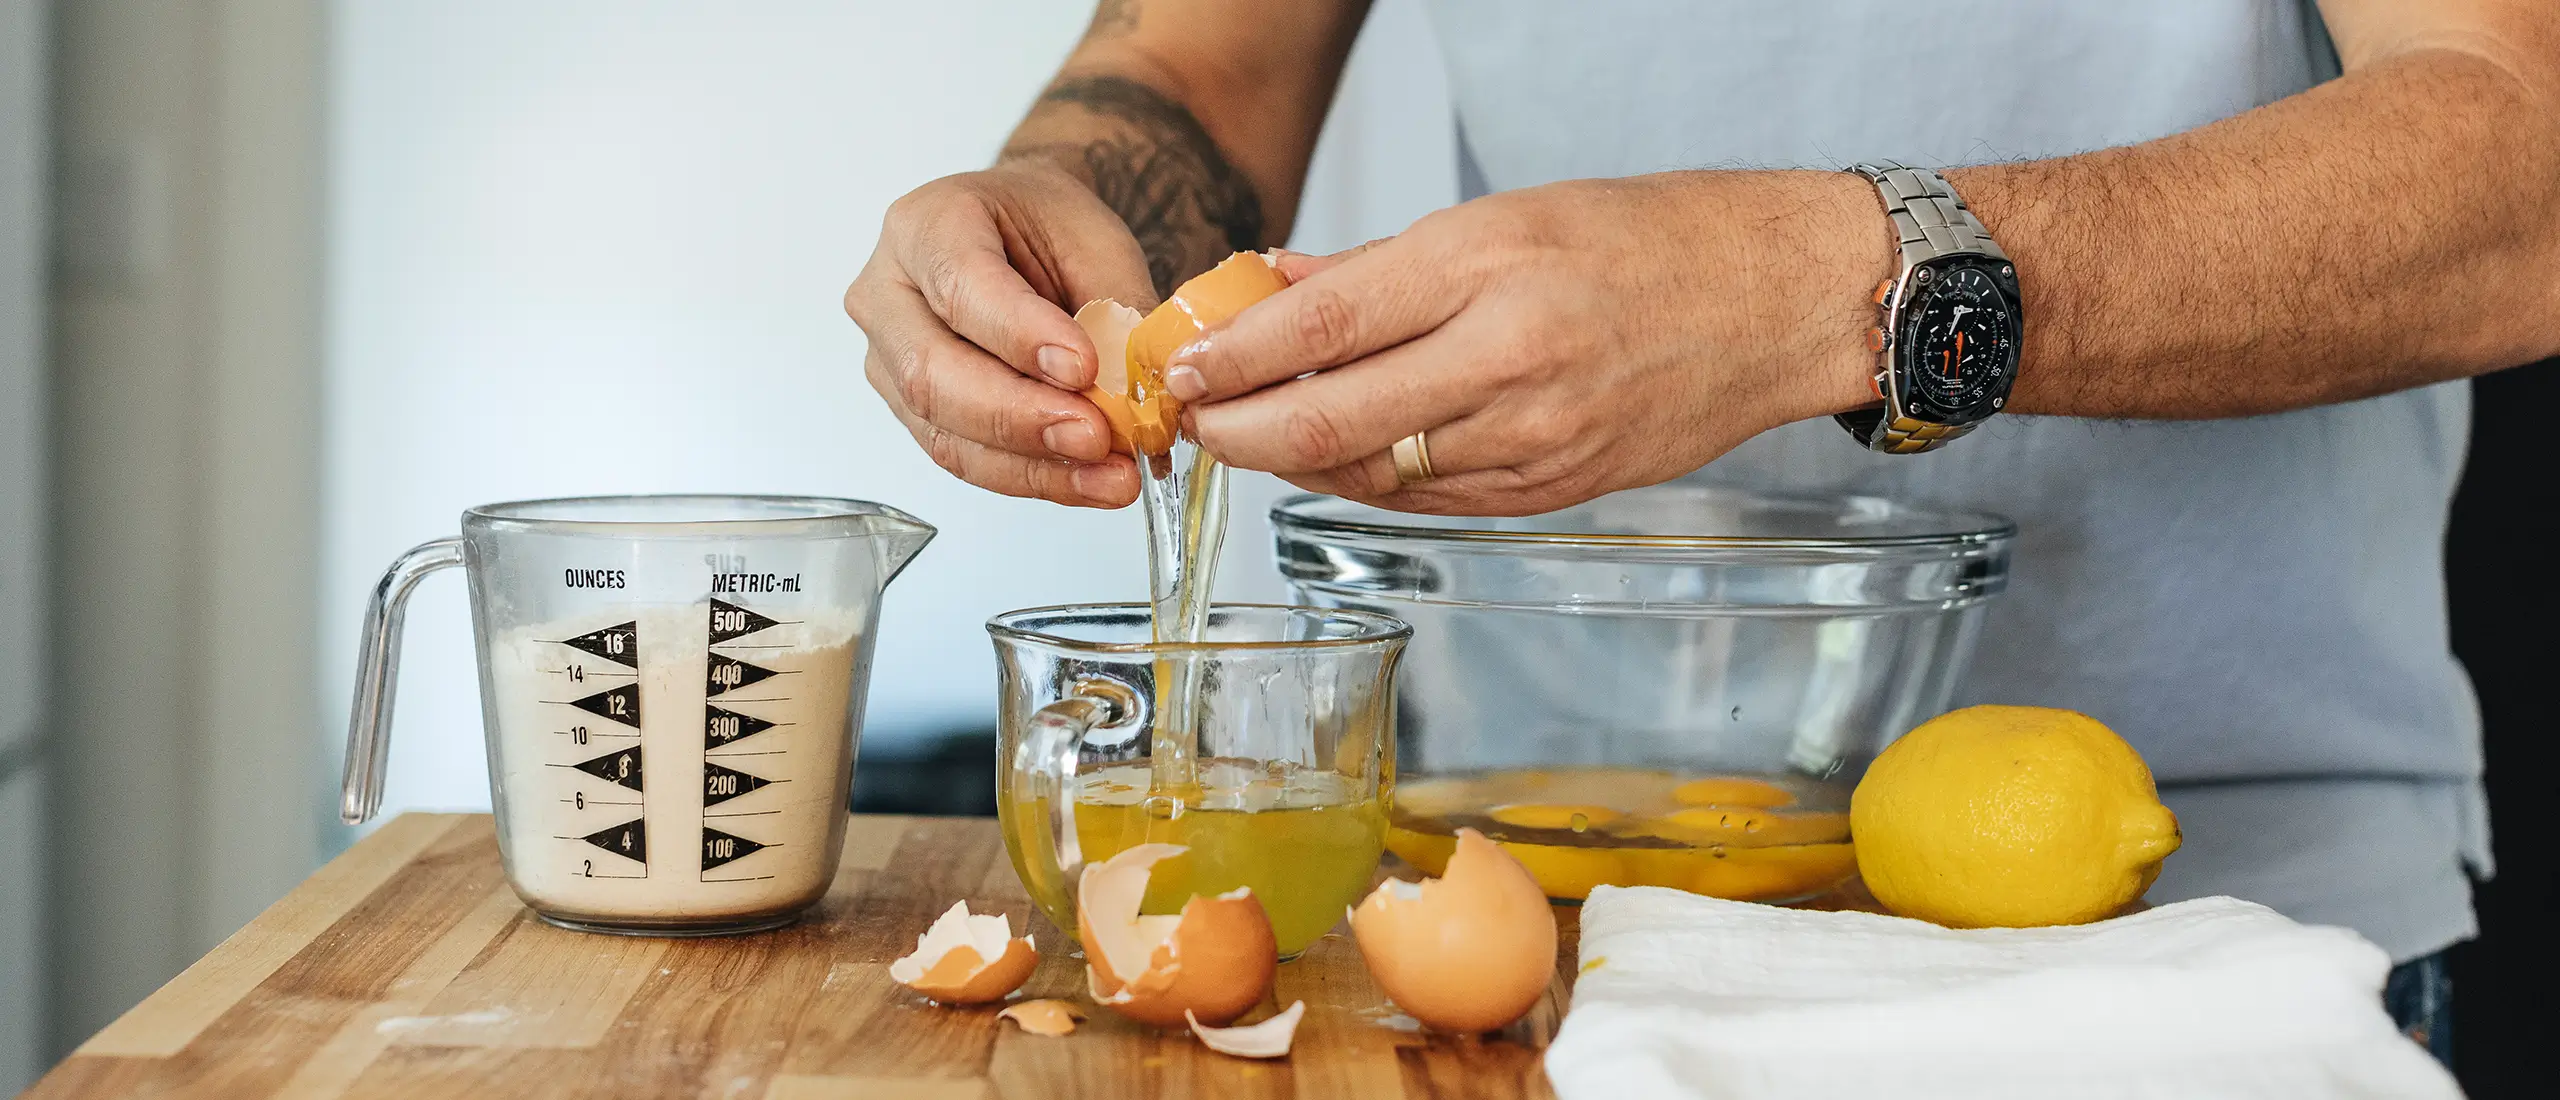 a man separating egg whites from egg yolks